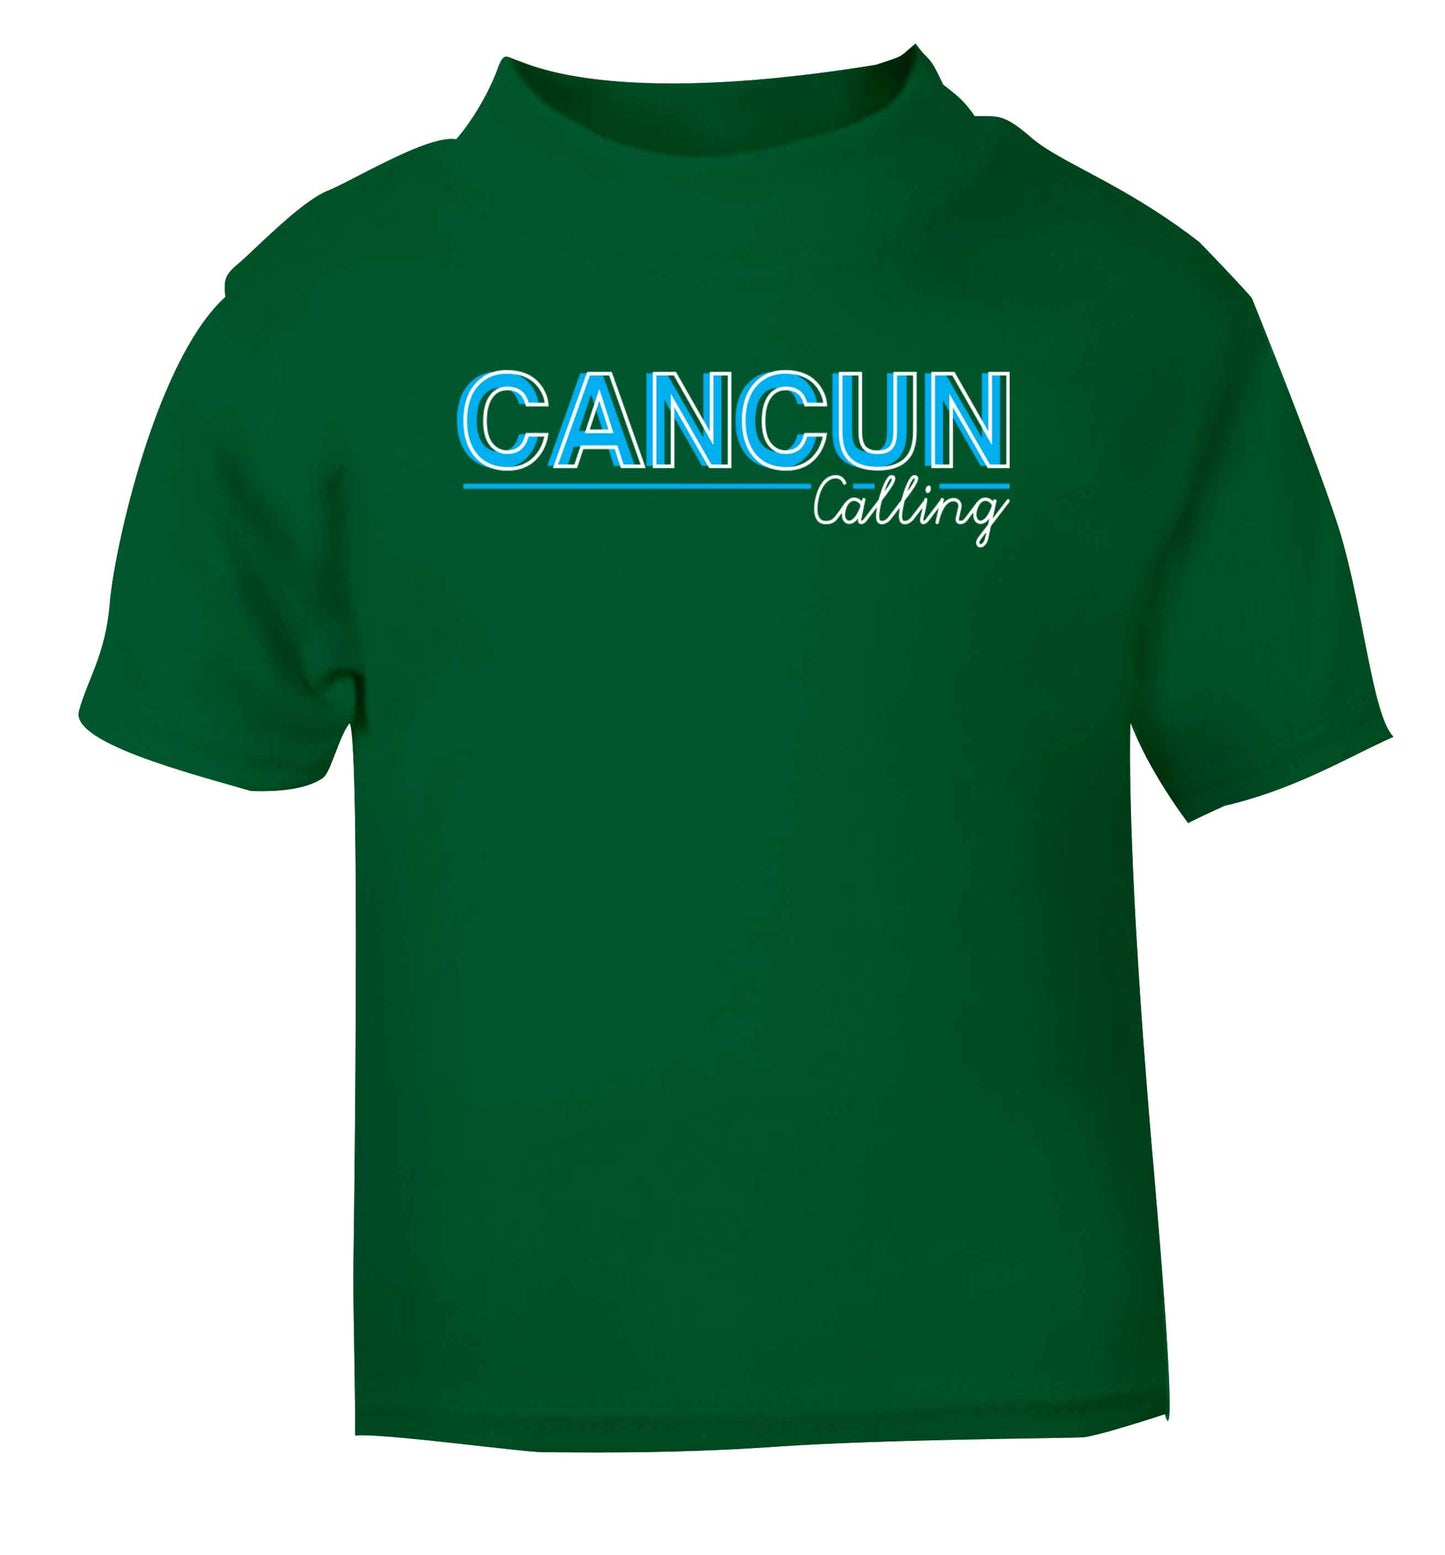 Cancun calling green Baby Toddler Tshirt 2 Years